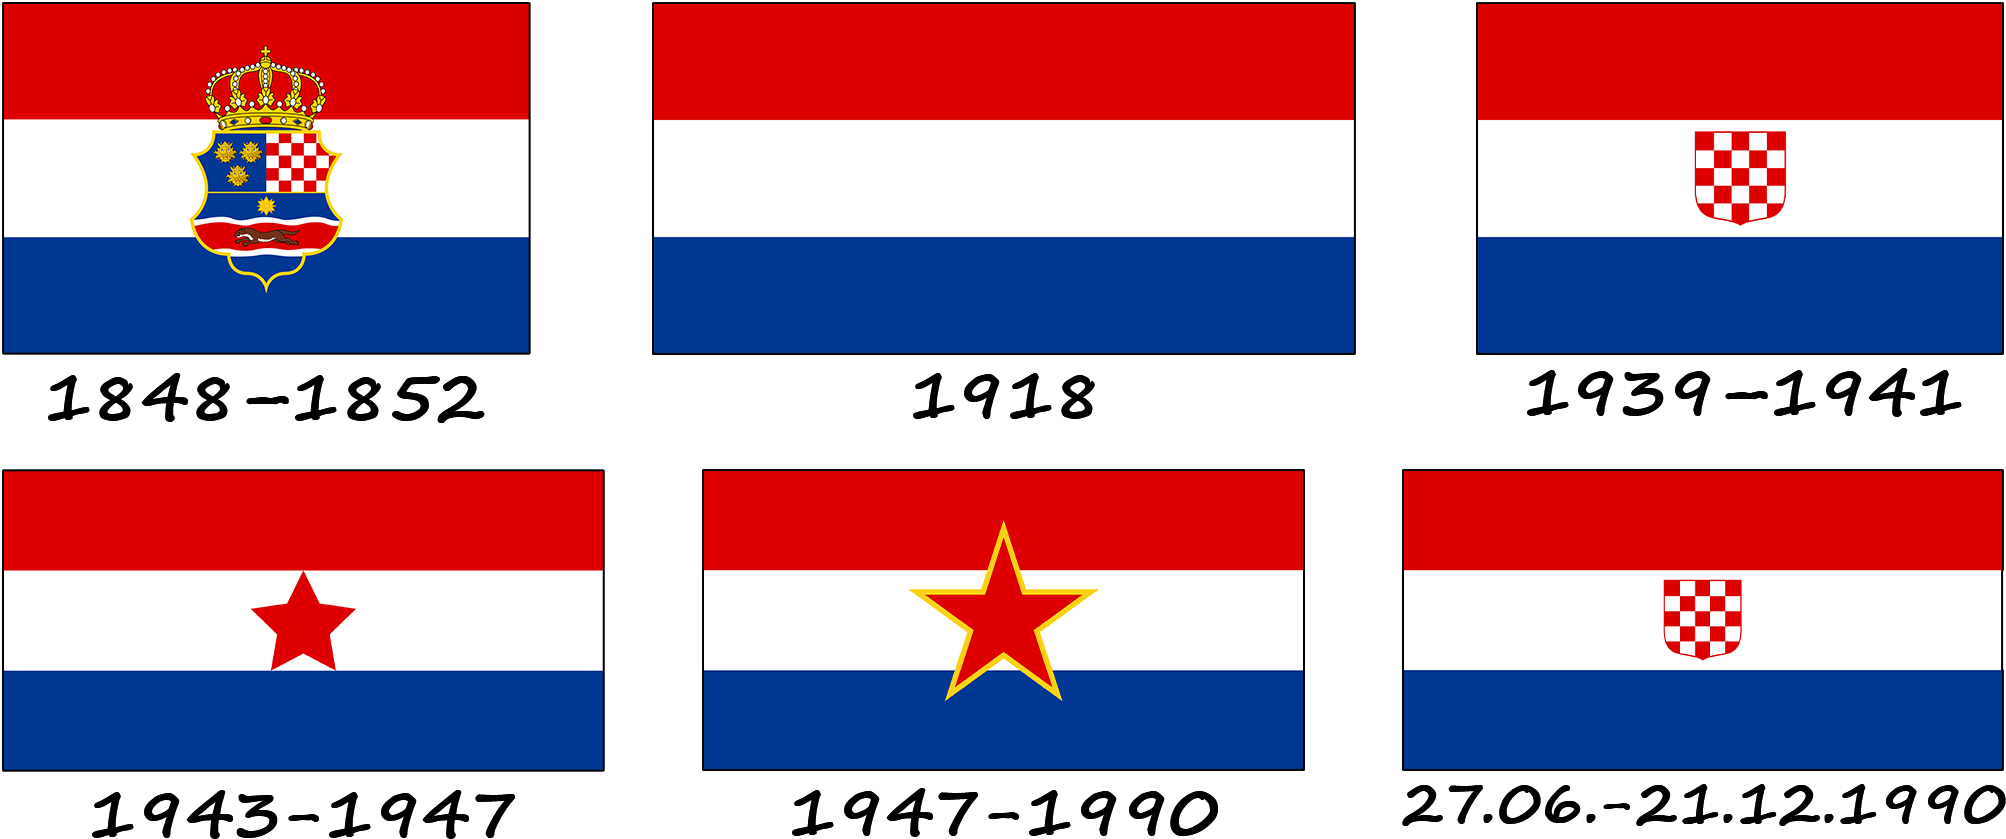 History of the Croatian flag